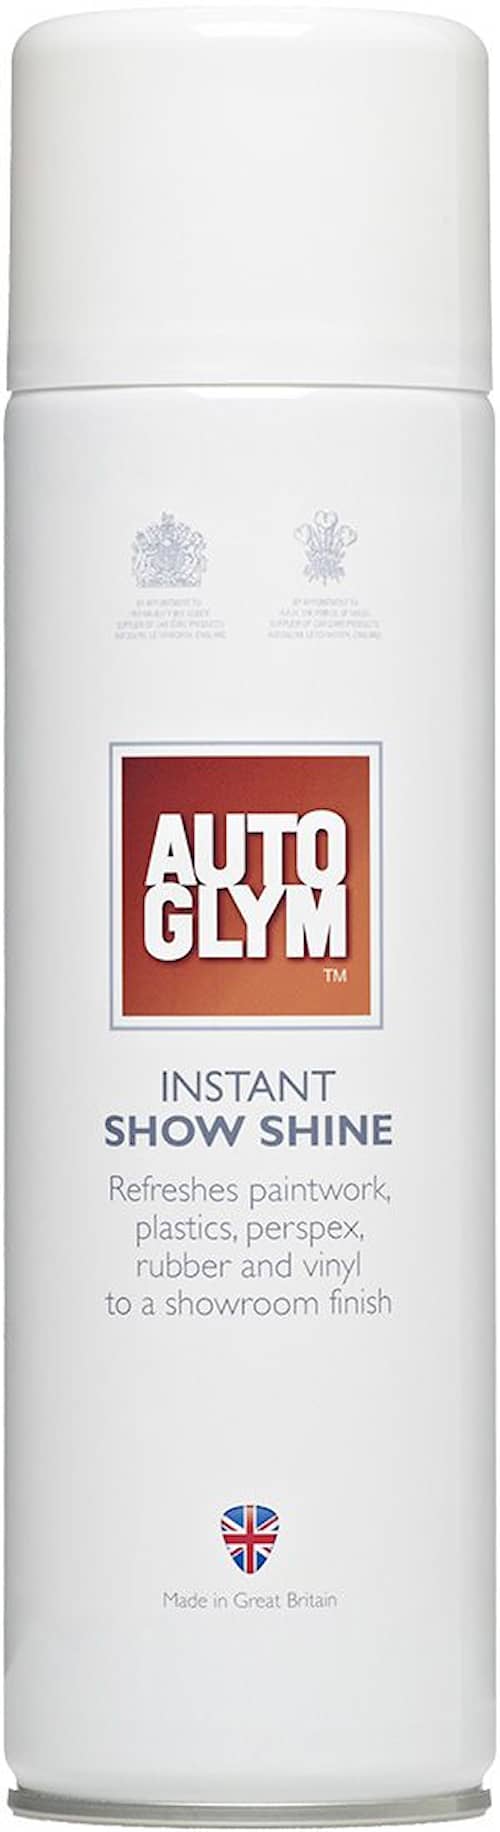 Autoglym Instant Show Shine 0,45l, polish